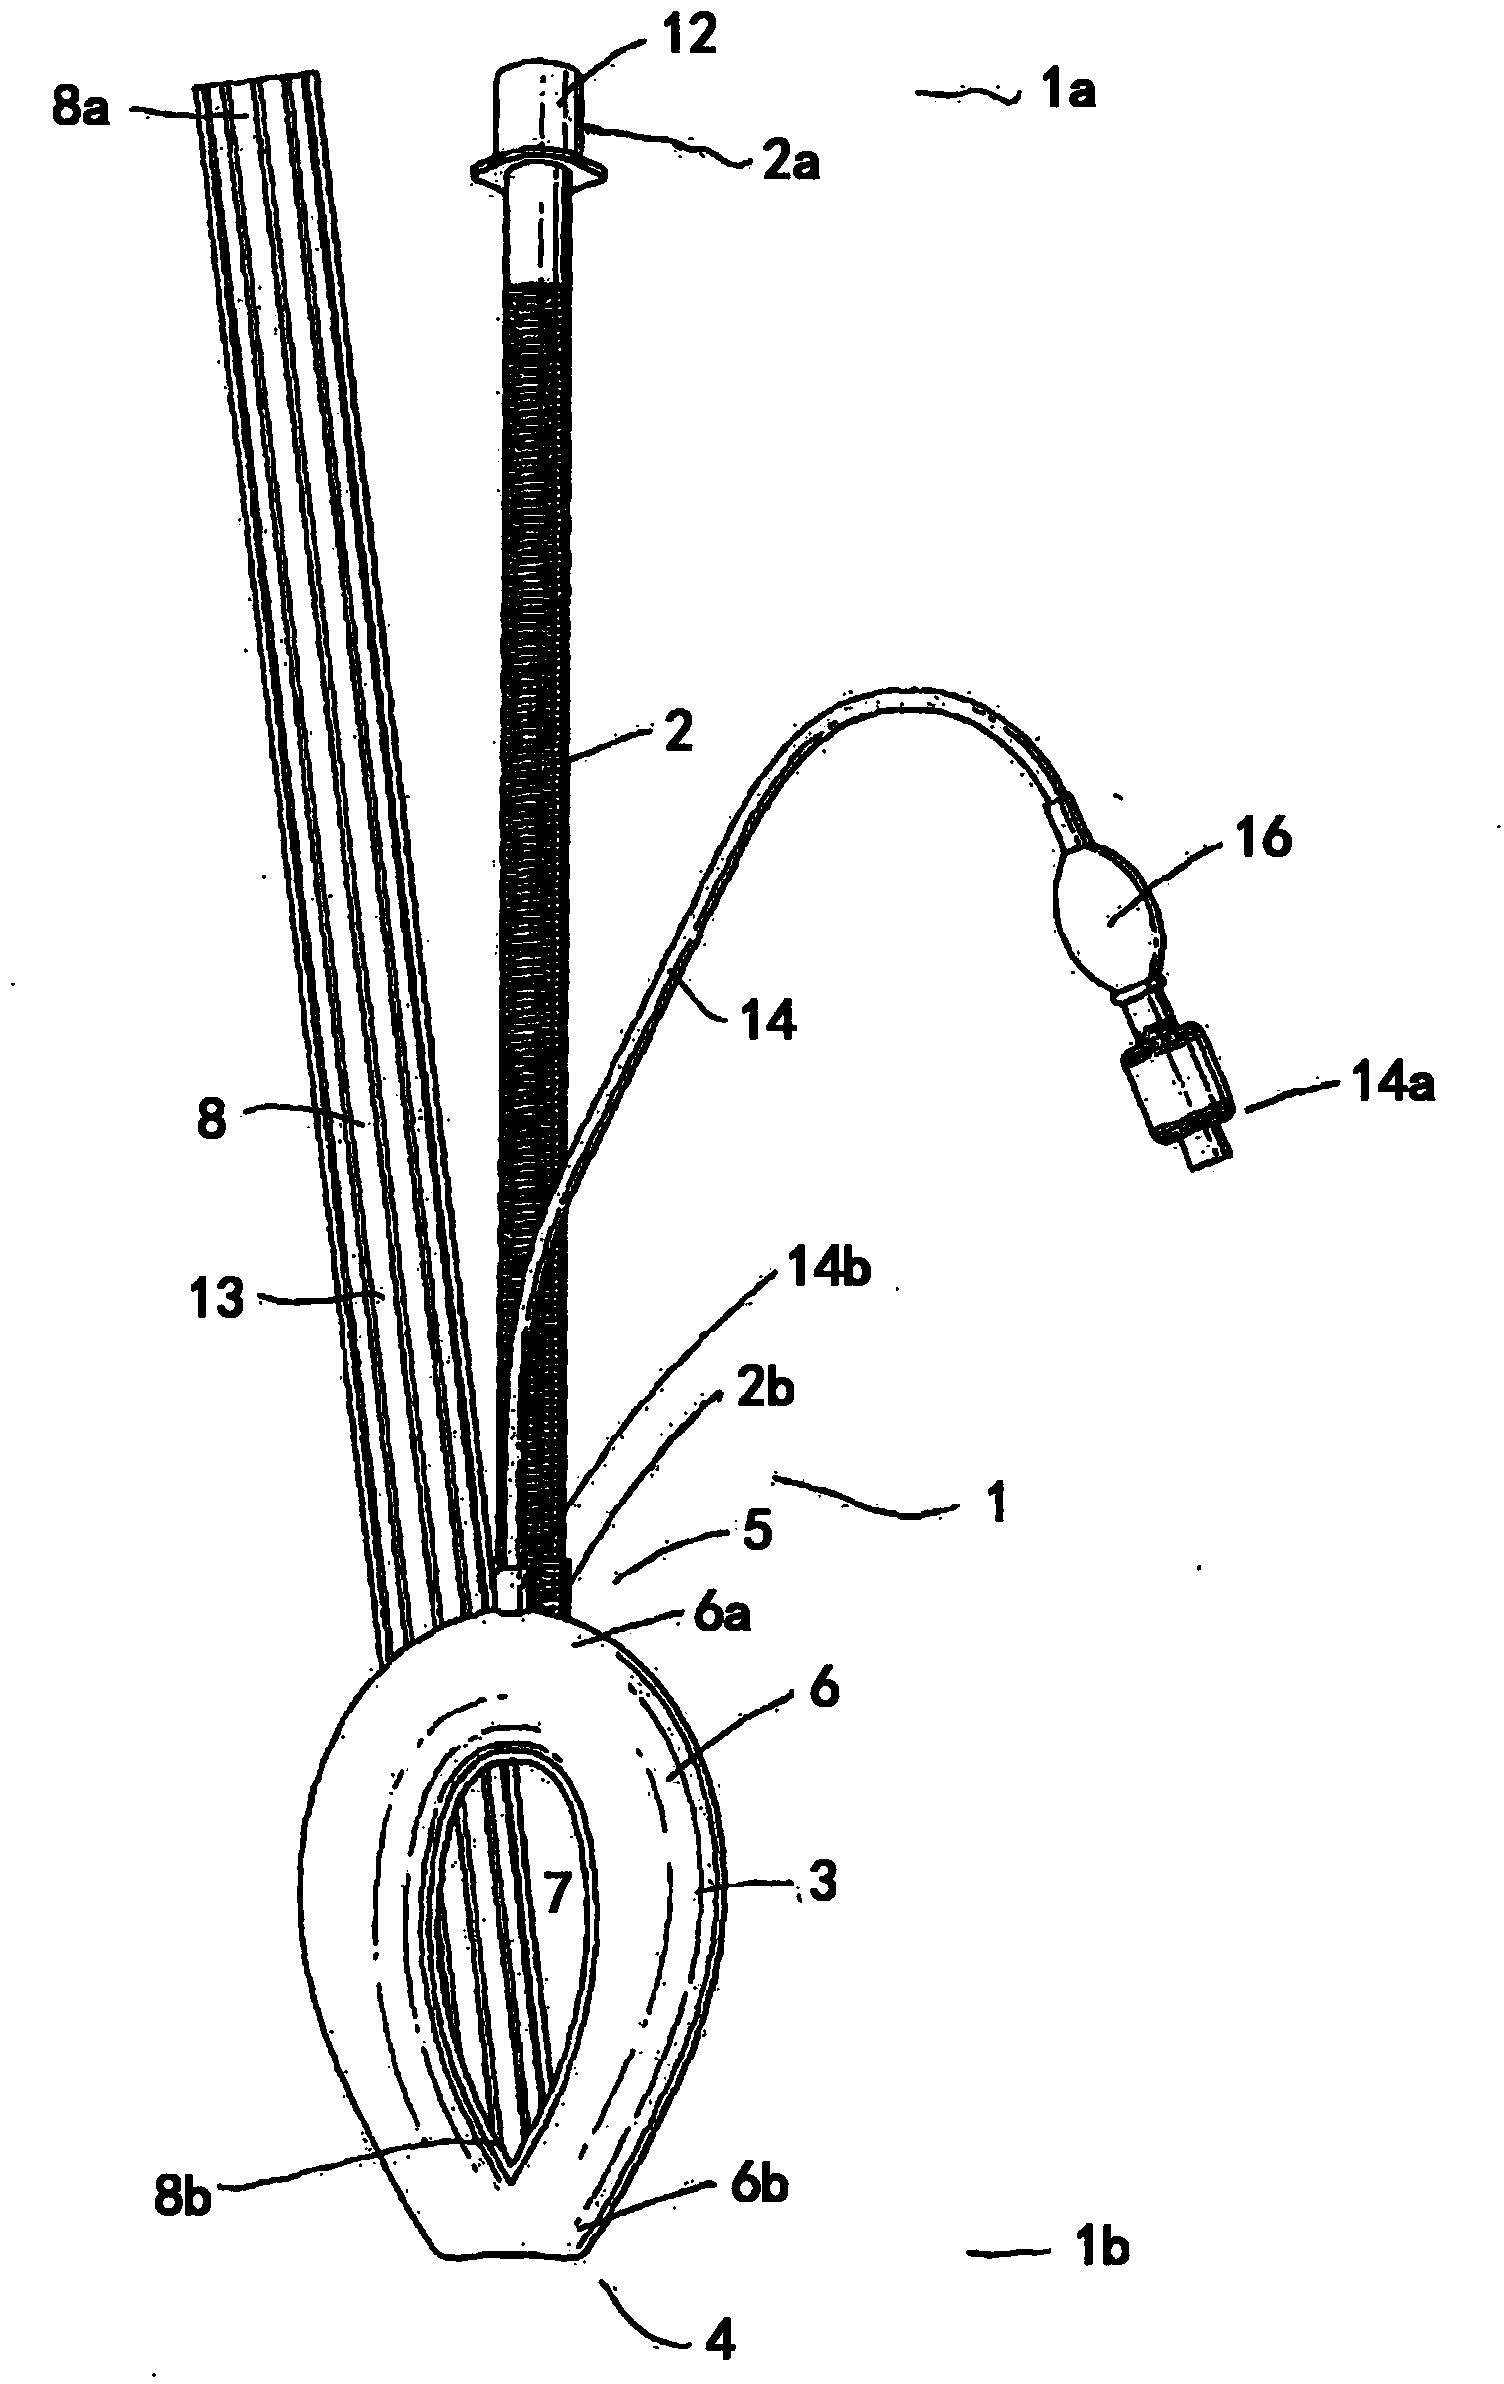 Endoscopy device